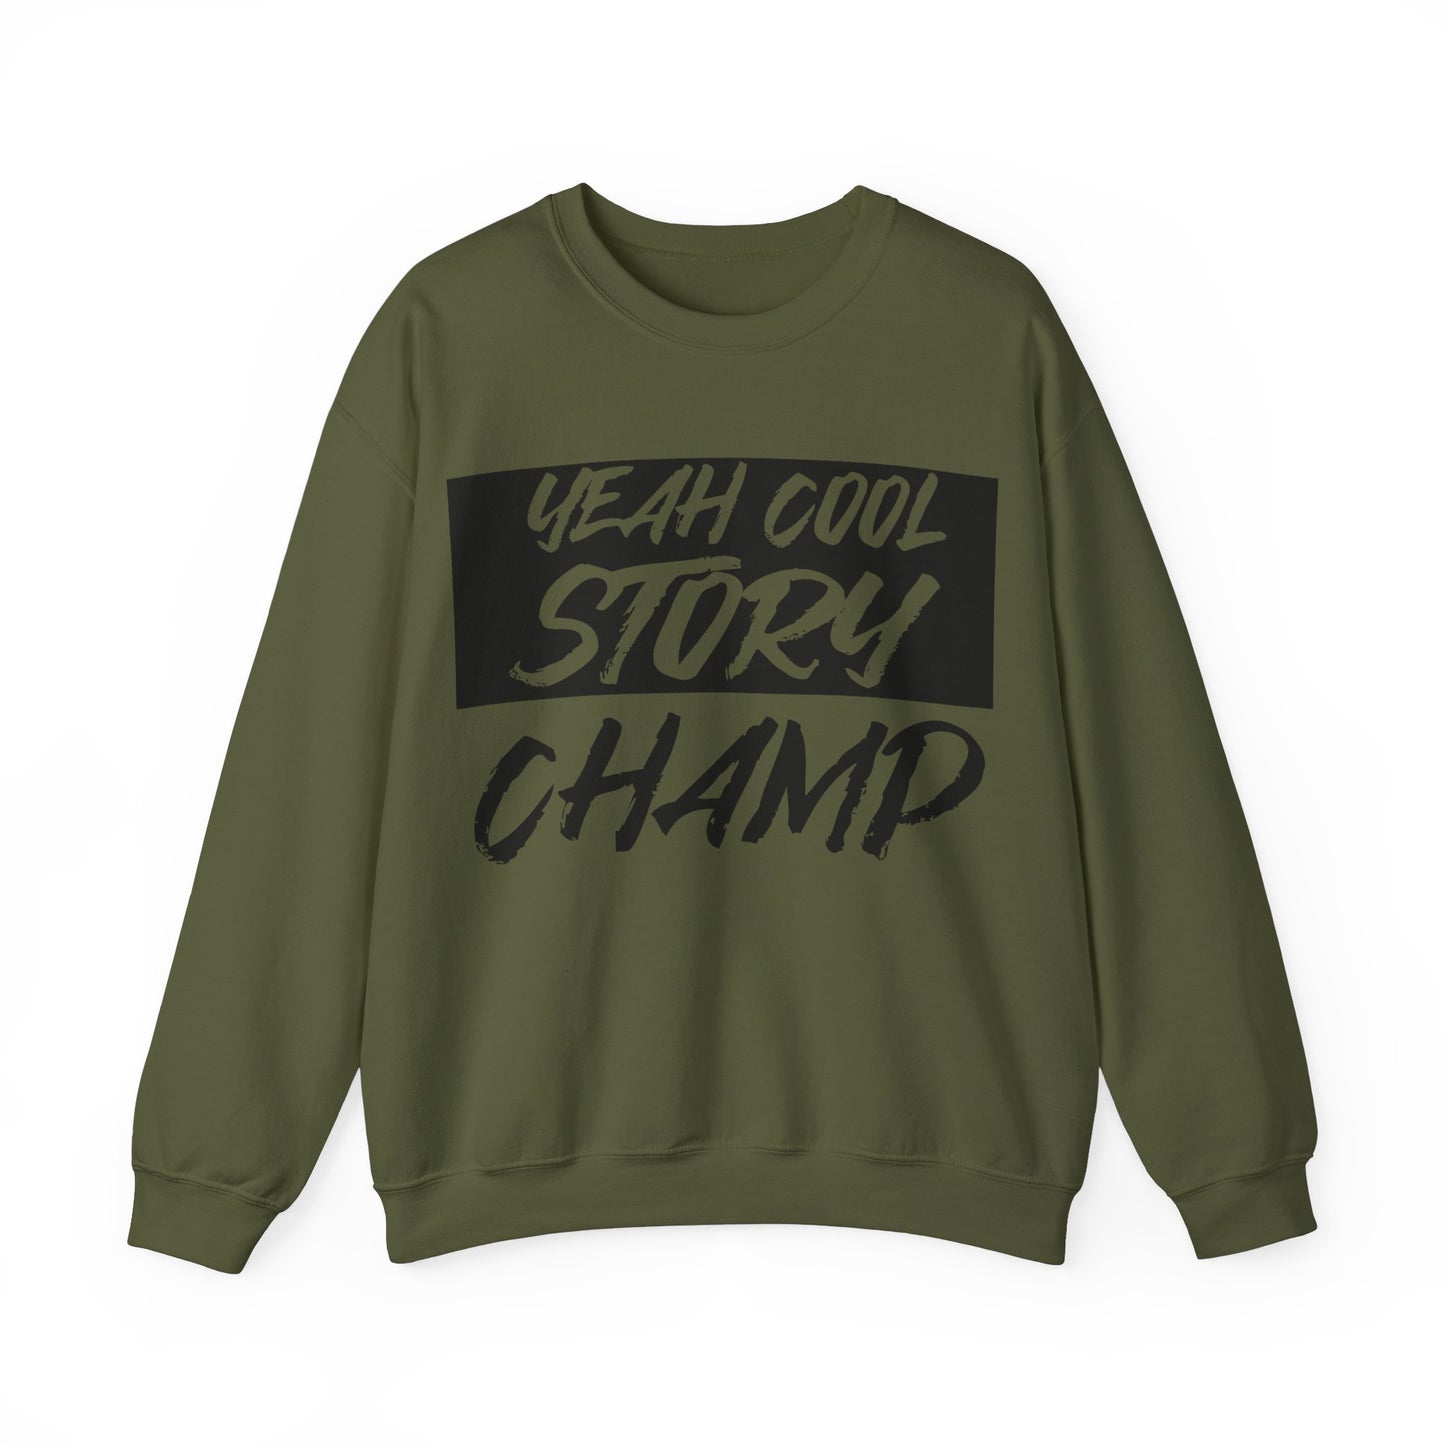 YEAH COOL STORY CHAMP - Crewneck Sweatshirt